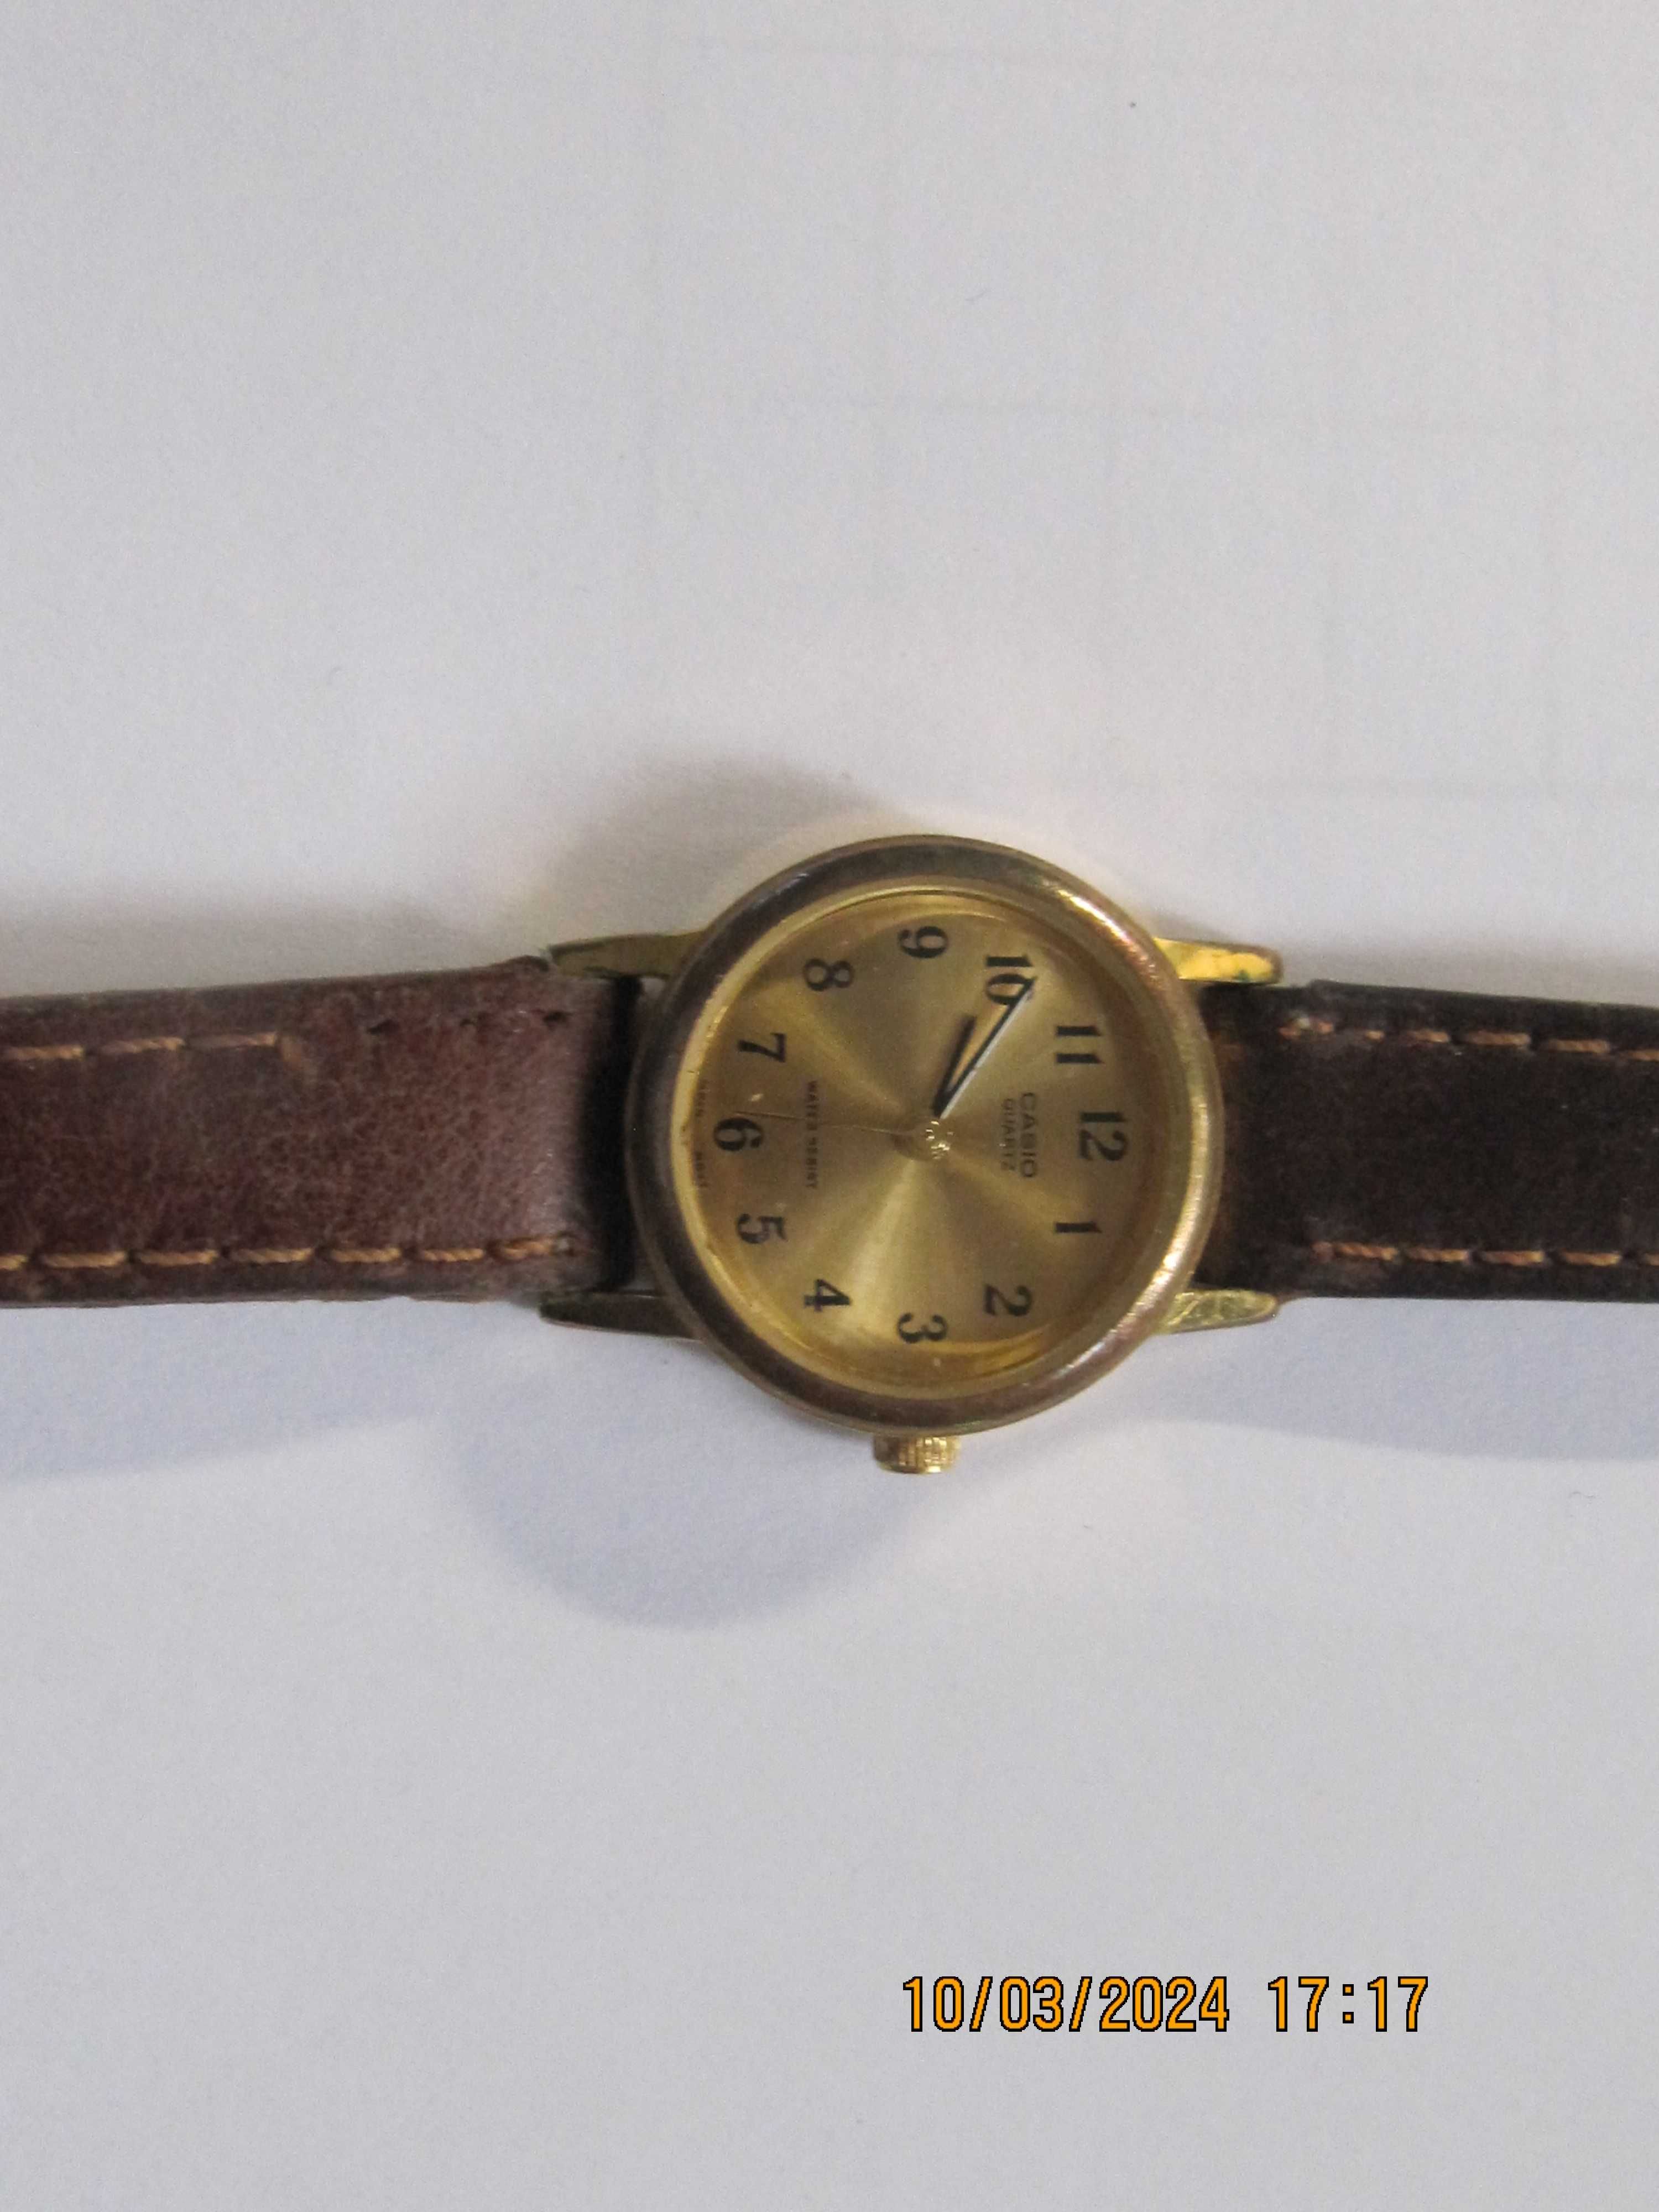 Casio LTP-1261 oryginalny damski zegarek